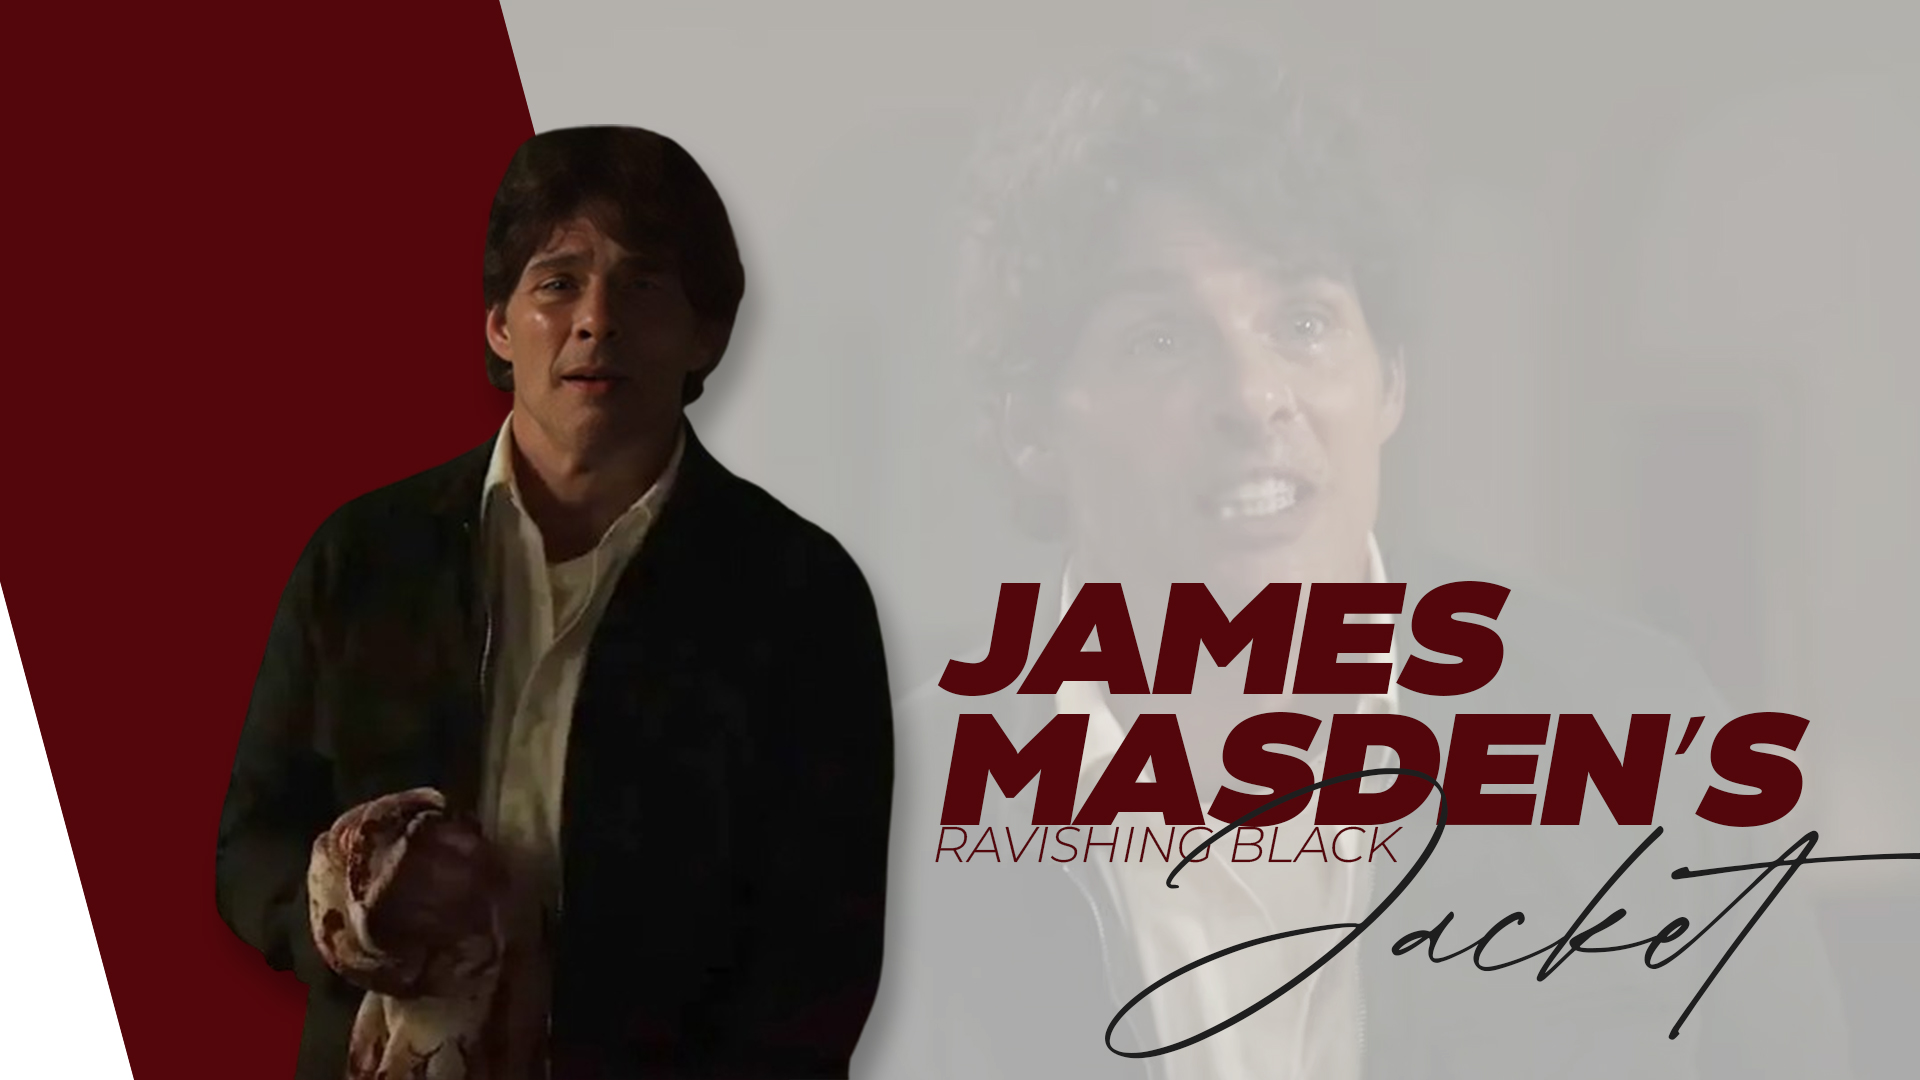 James Masden’s Ravishing Black Jacket